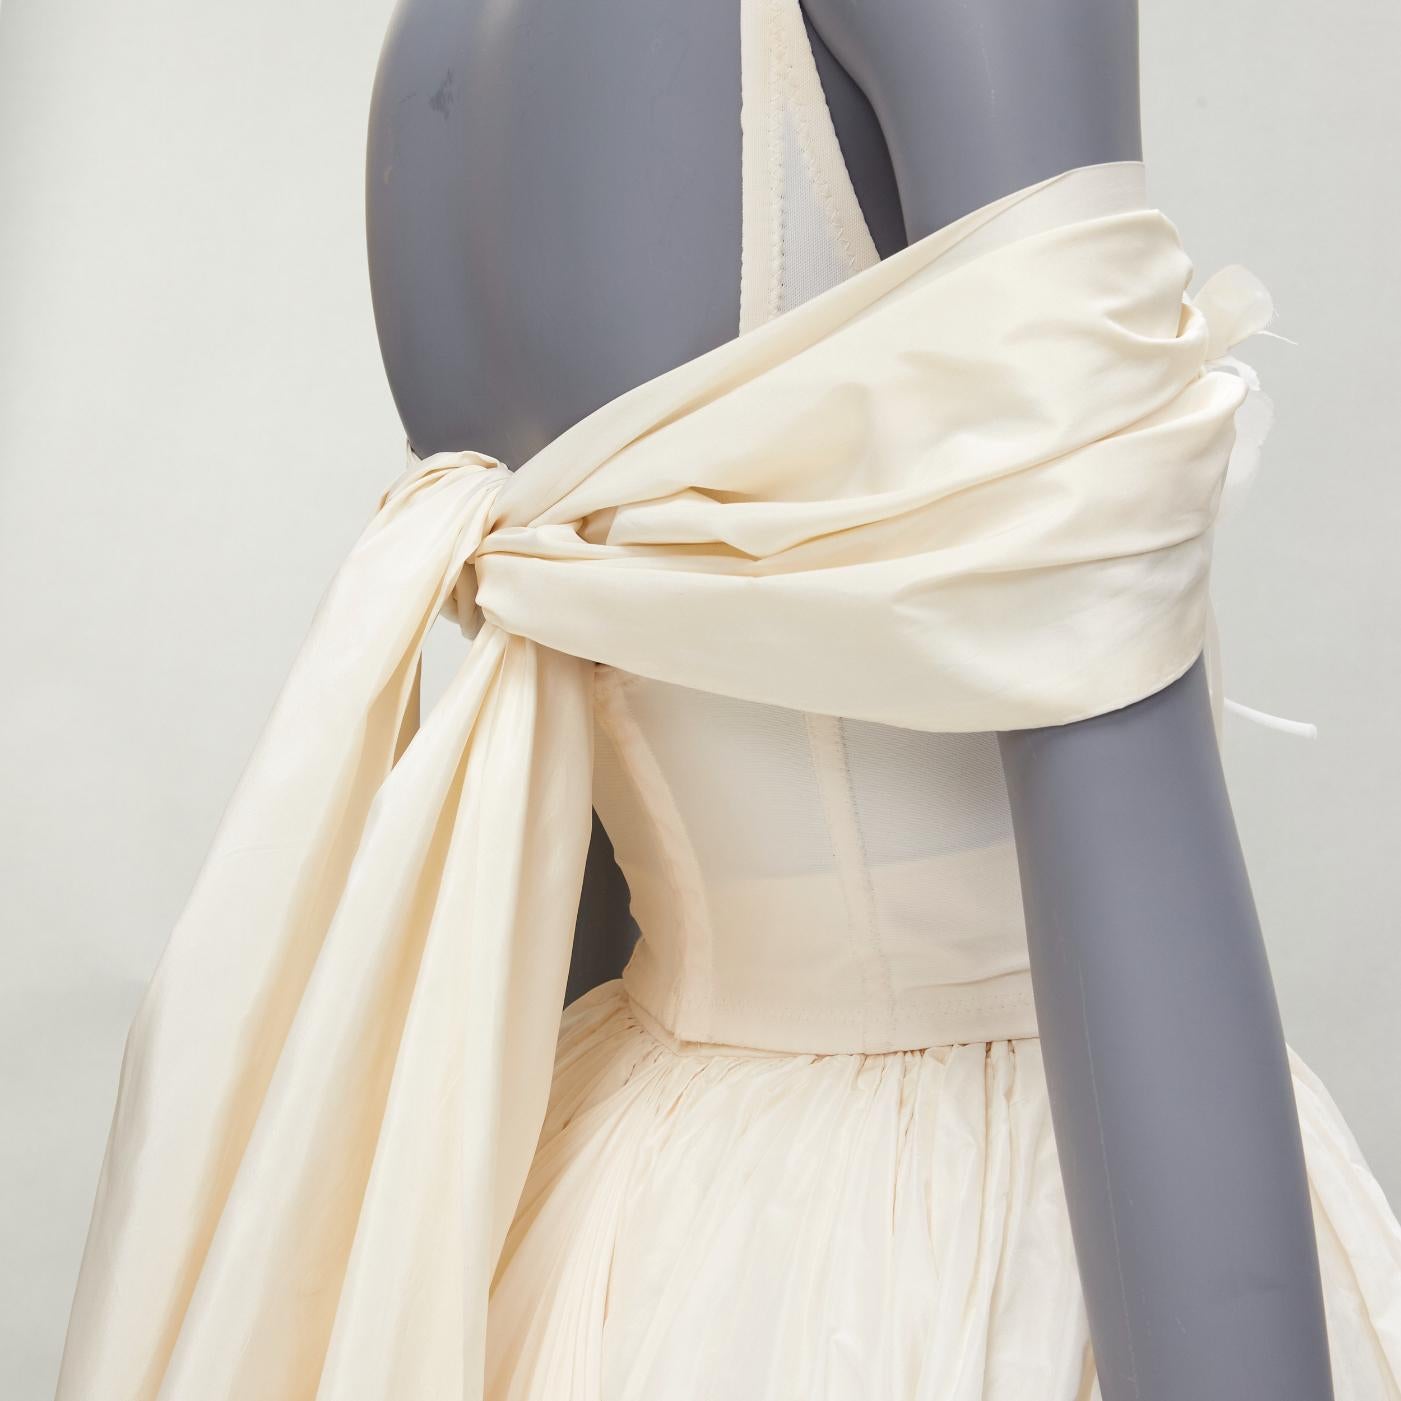 DOLCE GABBANA 1990s Vintage corset bustier tulle skirt 2 piece bridal dress IT38 For Sale 5